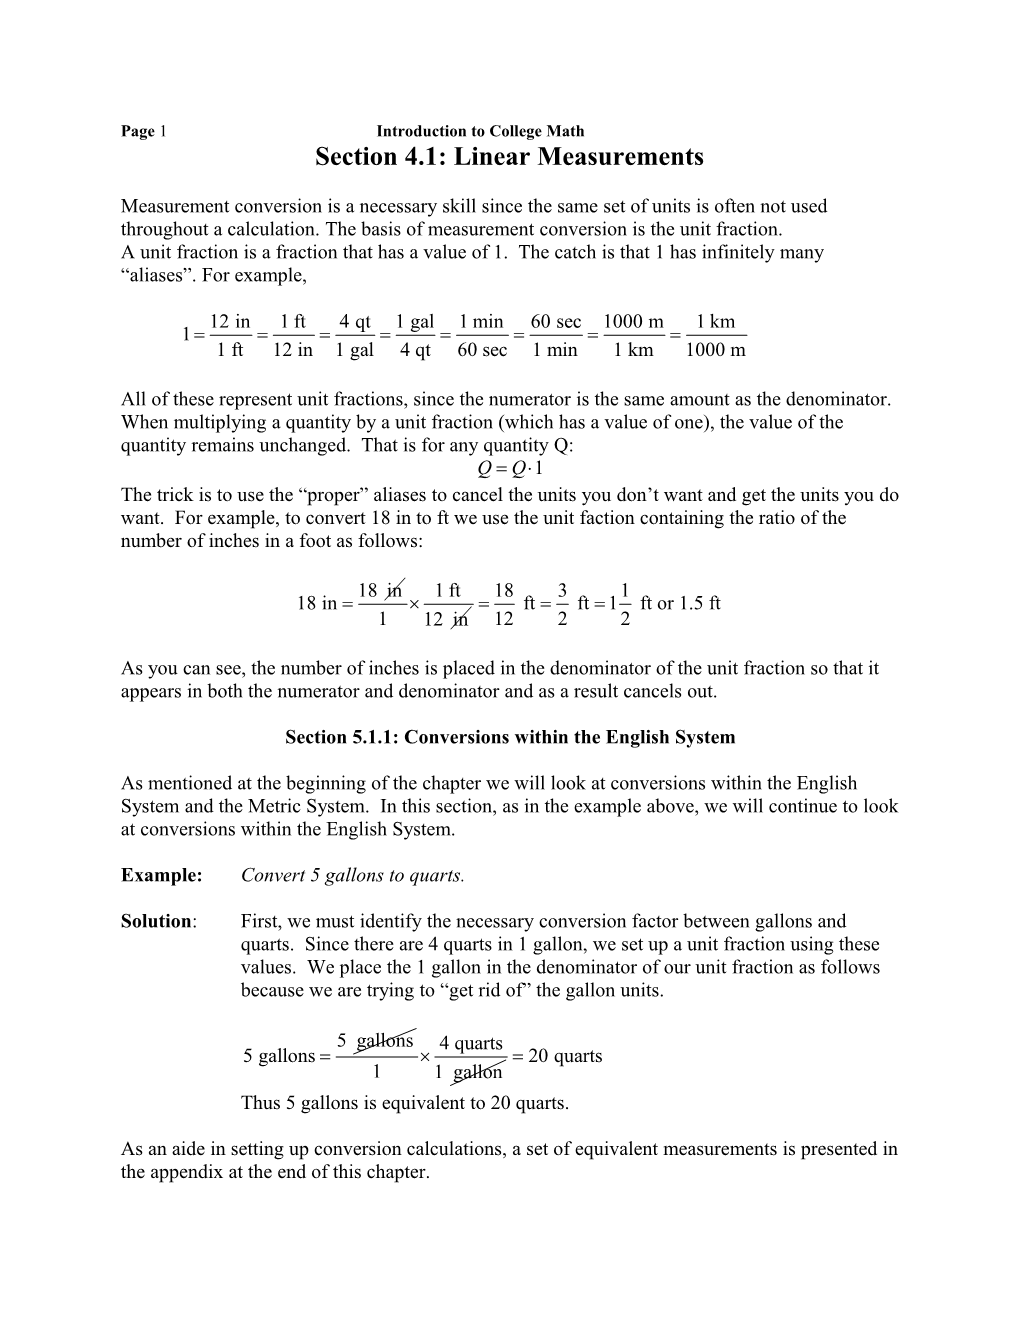 Introduction to College Mathematics